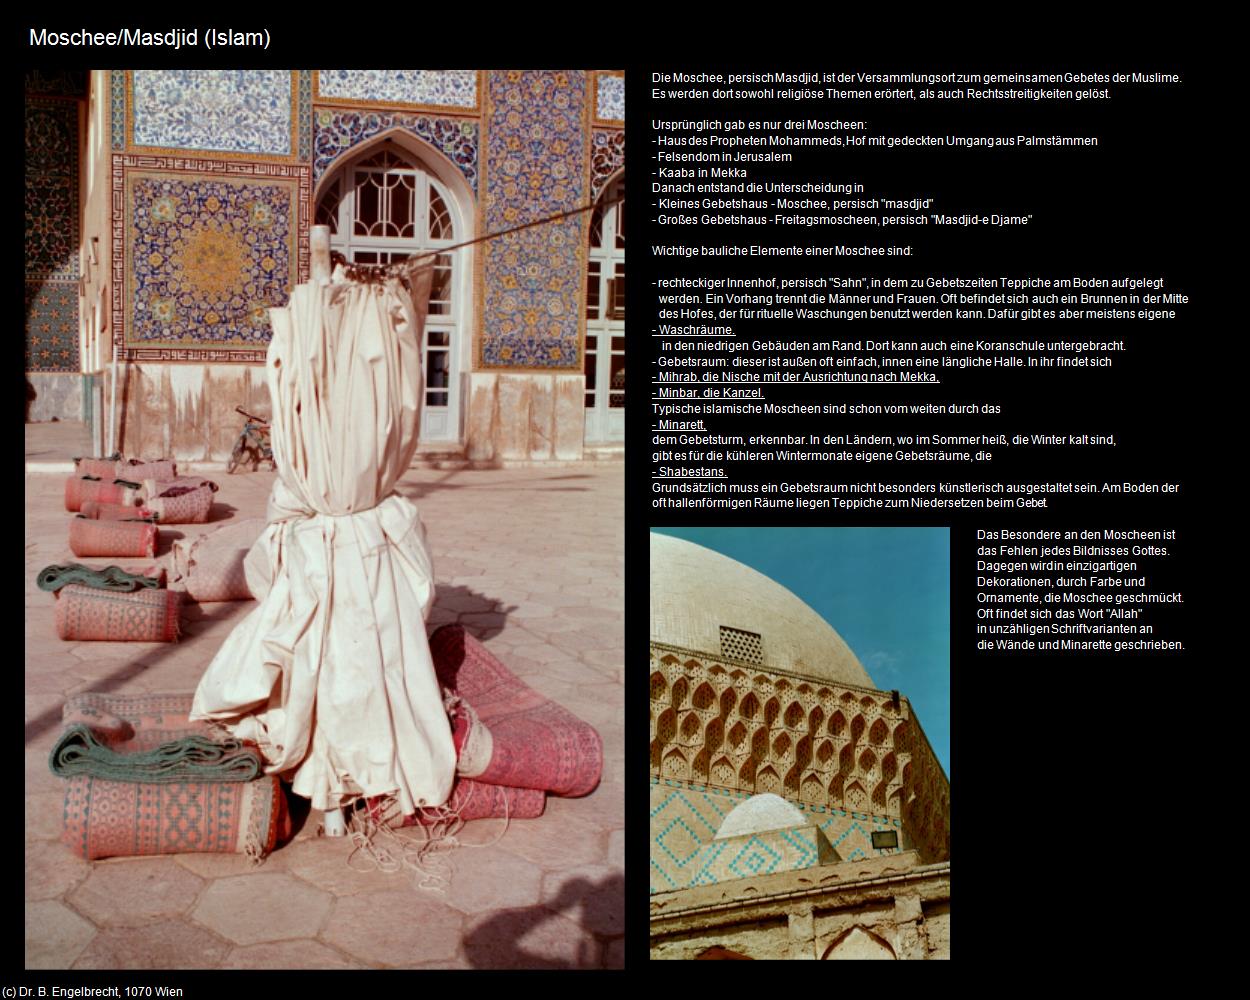 Moschee/Masdjid (IRAN-Religion II - Islam) in Iran(c)B.Engelbrecht